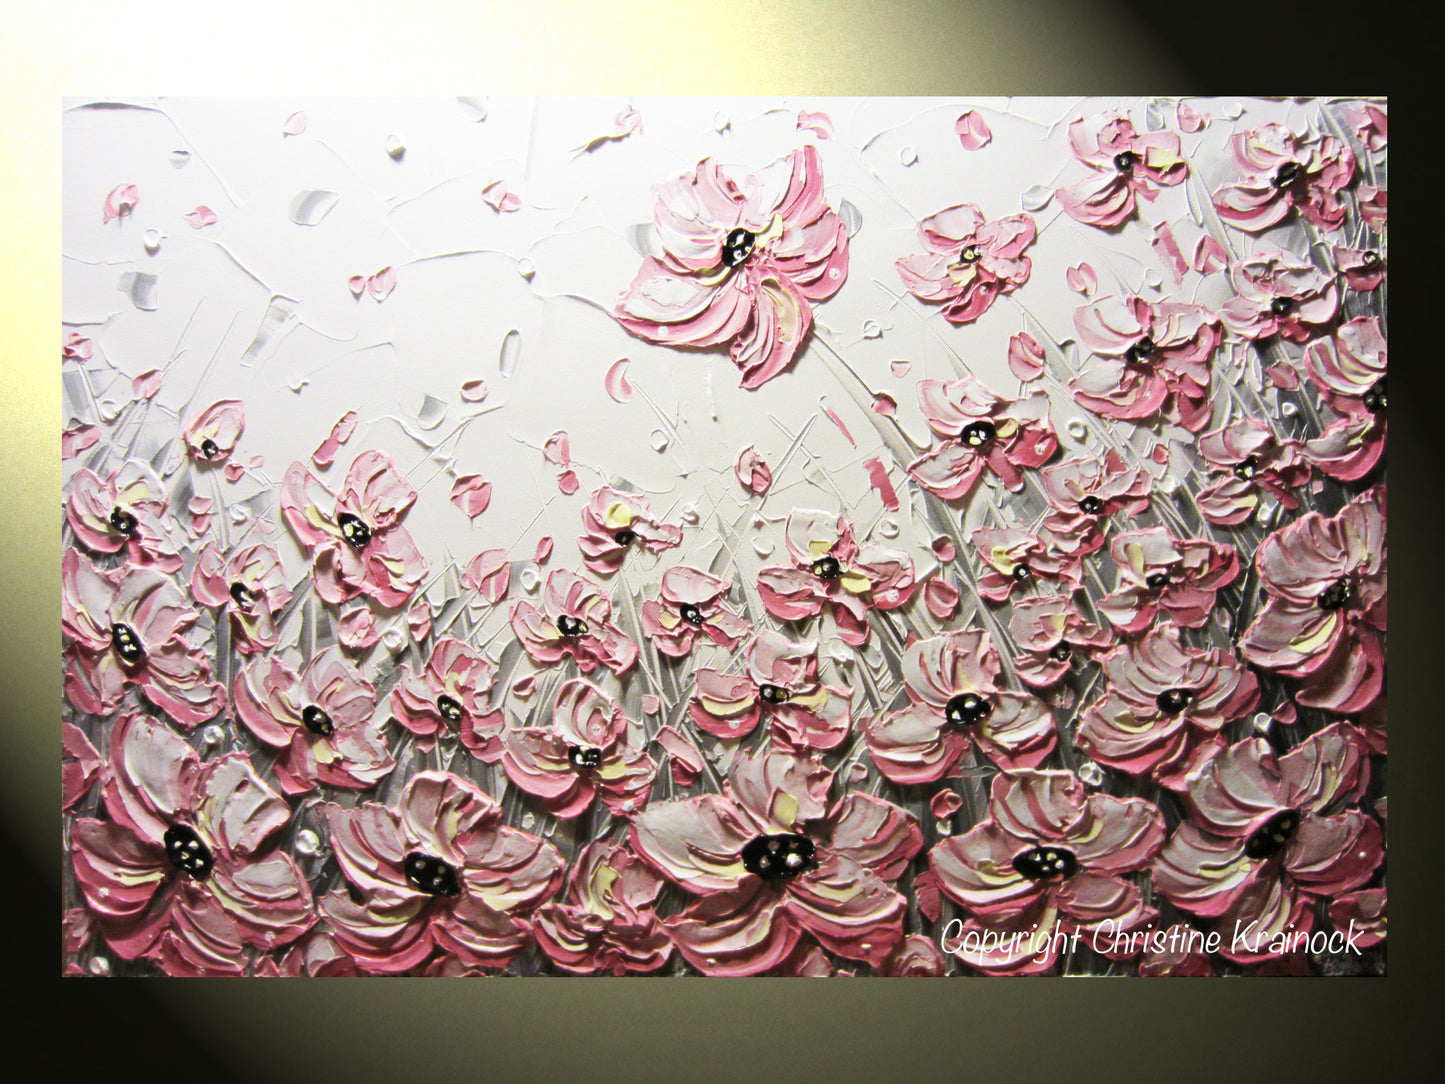 ORIGINAL Art Abstract Painting Pink Poppies Flowers Pink White Grey Textured Large WallnArt Decor - Christine Krainock Art - Contemporary Art by Christine - 5